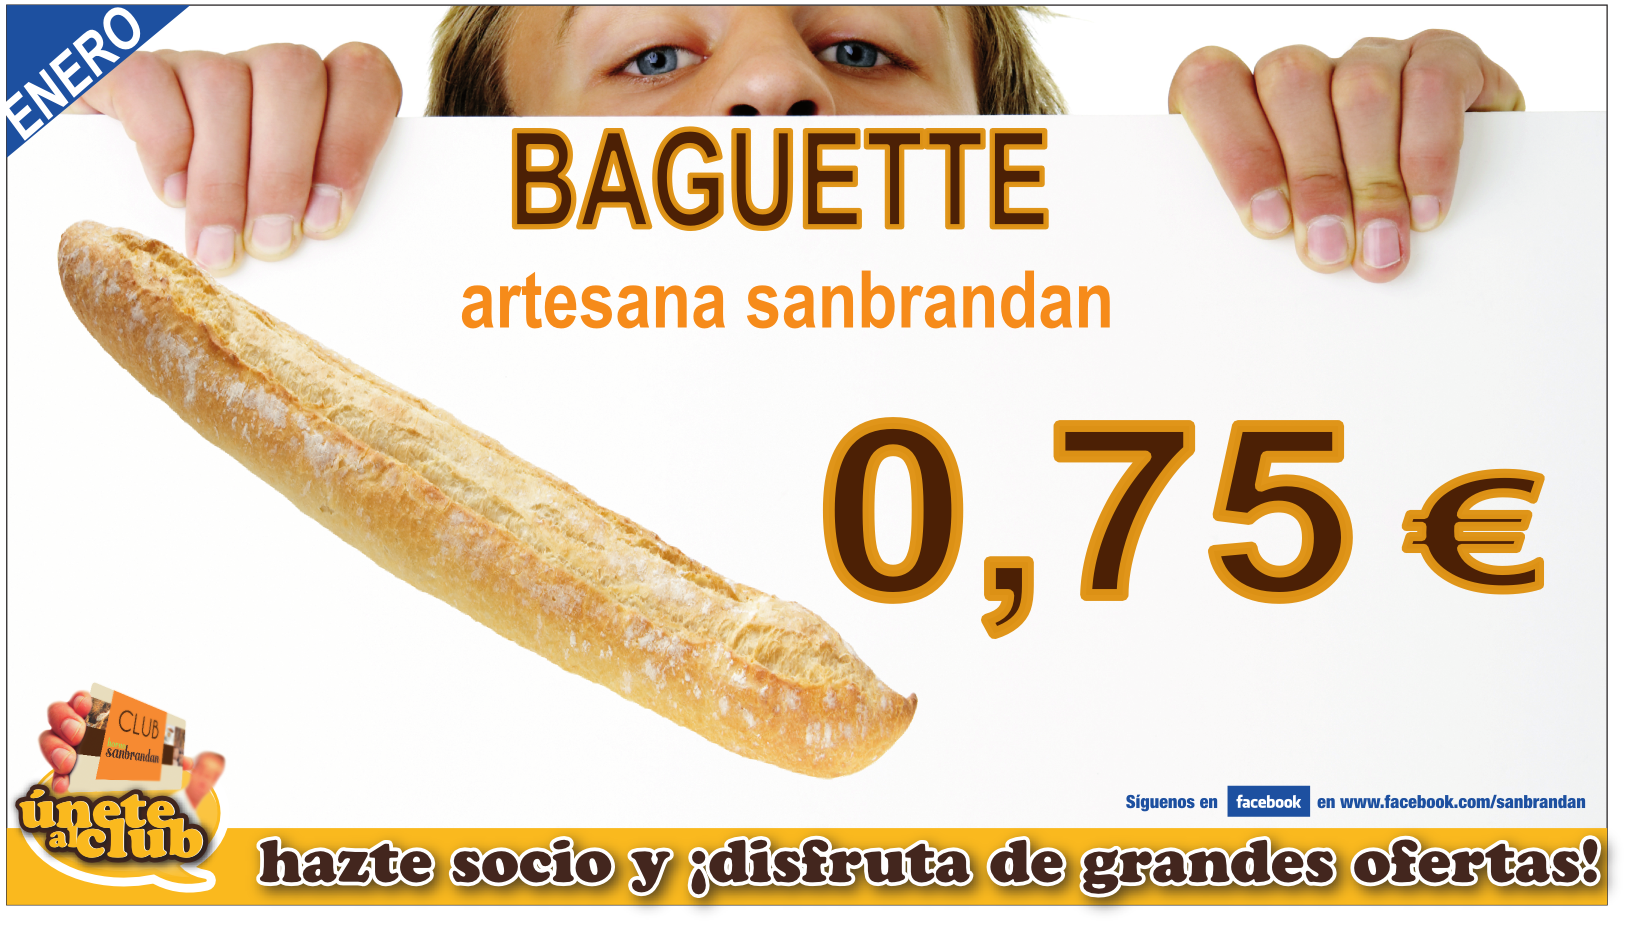 Baguette artesana sanbrandan 0,75 €